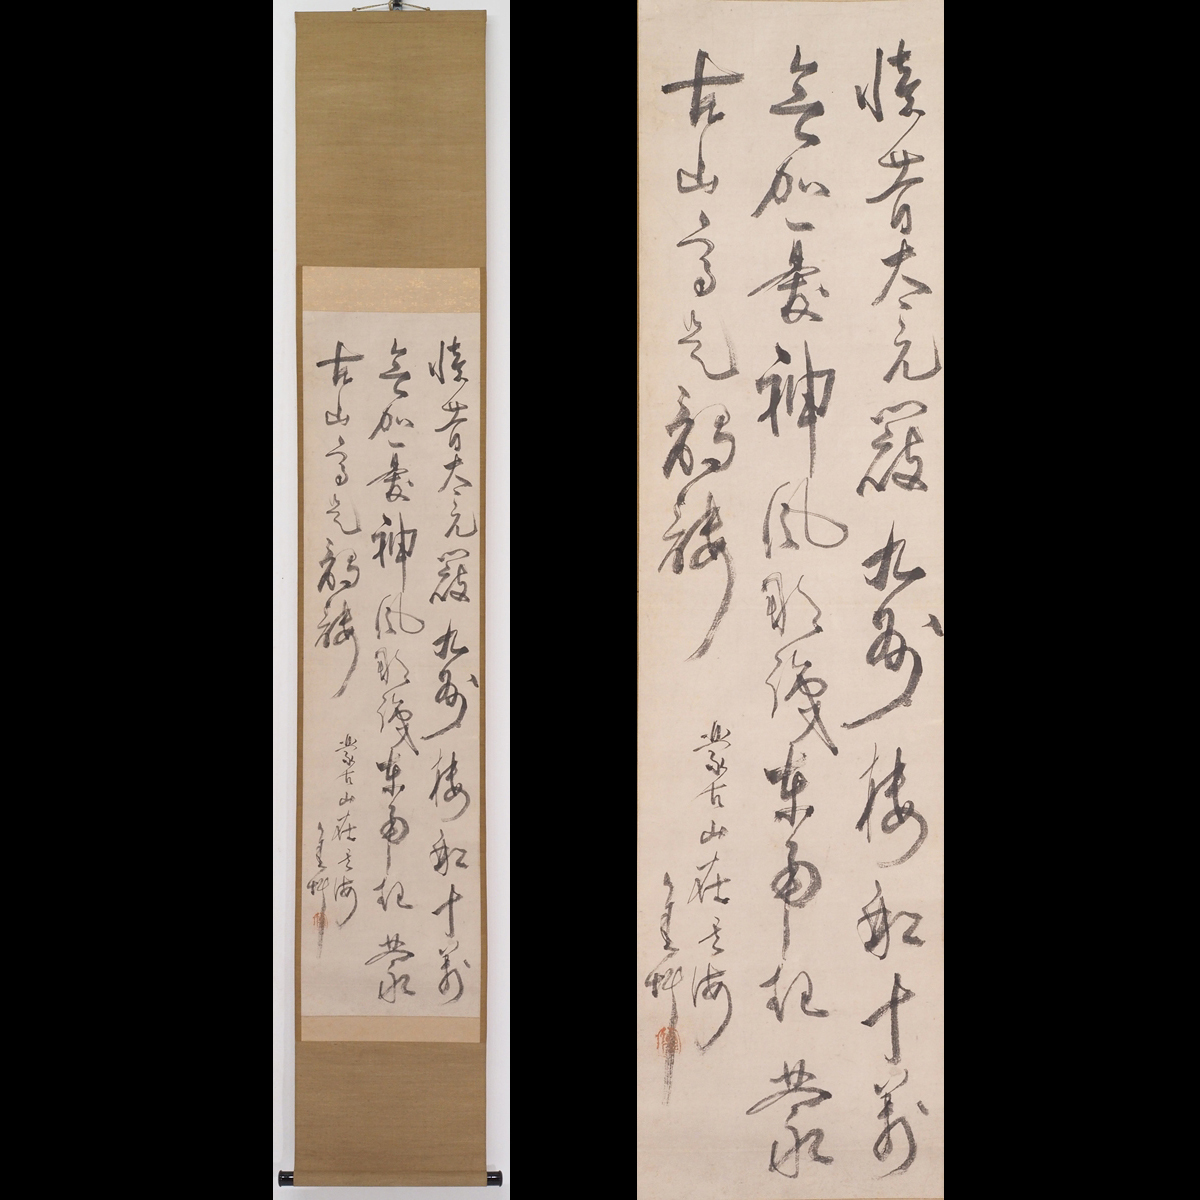 [Auténtico] [Watari-kan] [Sengai] 8388 Pergamino colgante, tres líneas de caligrafía, Poema de la montaña de Mongolia, Tomitaki Senbako, papel, Fukuoka, secta rinzai, inscrito, Obra de arte, libro, pergamino colgante